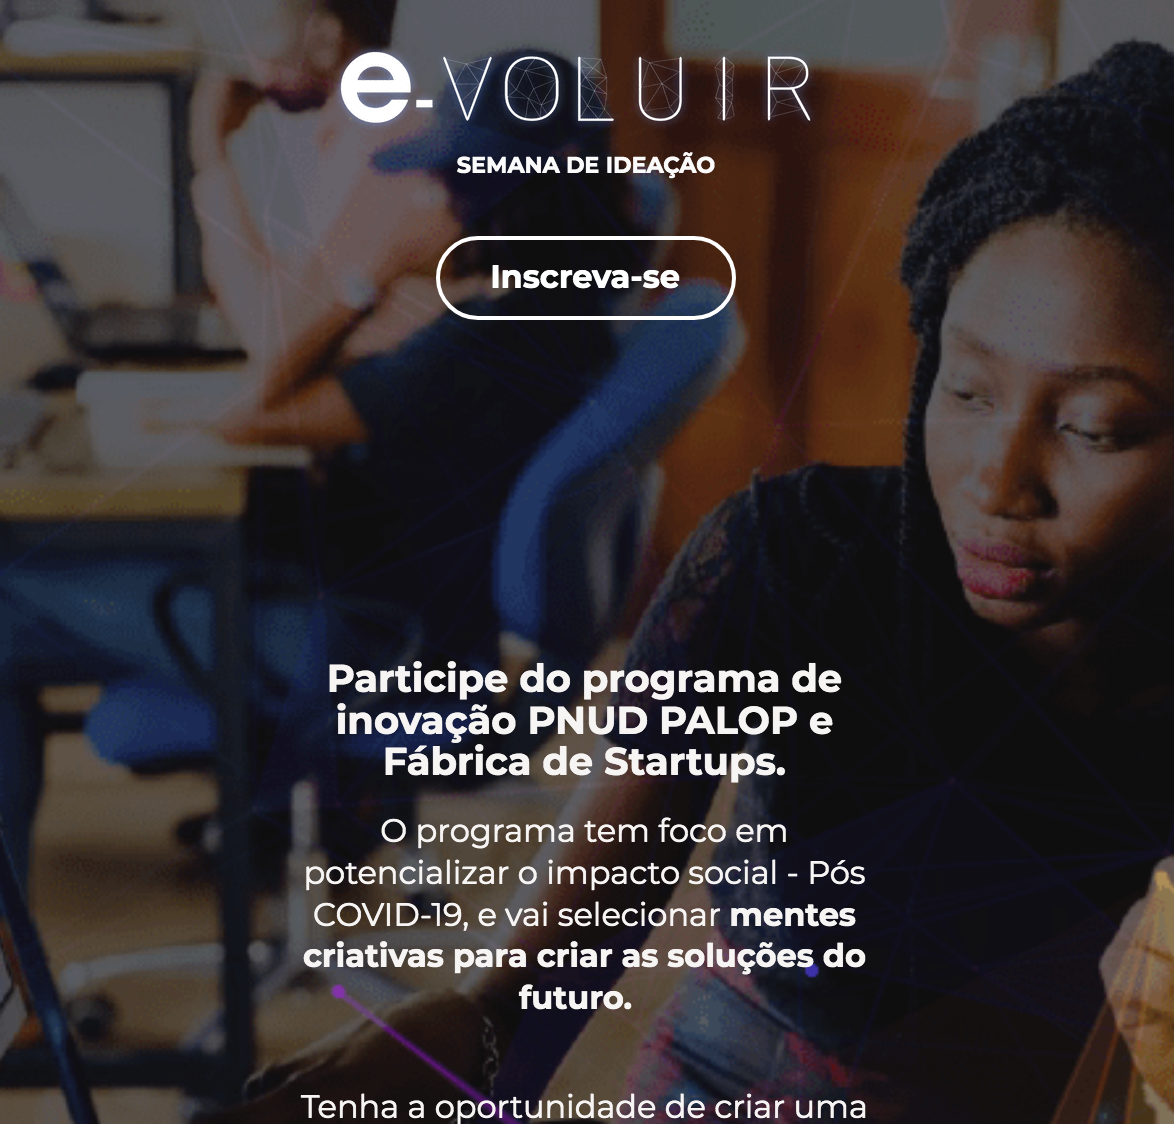 e-Voluir, startup PNUD PALOP